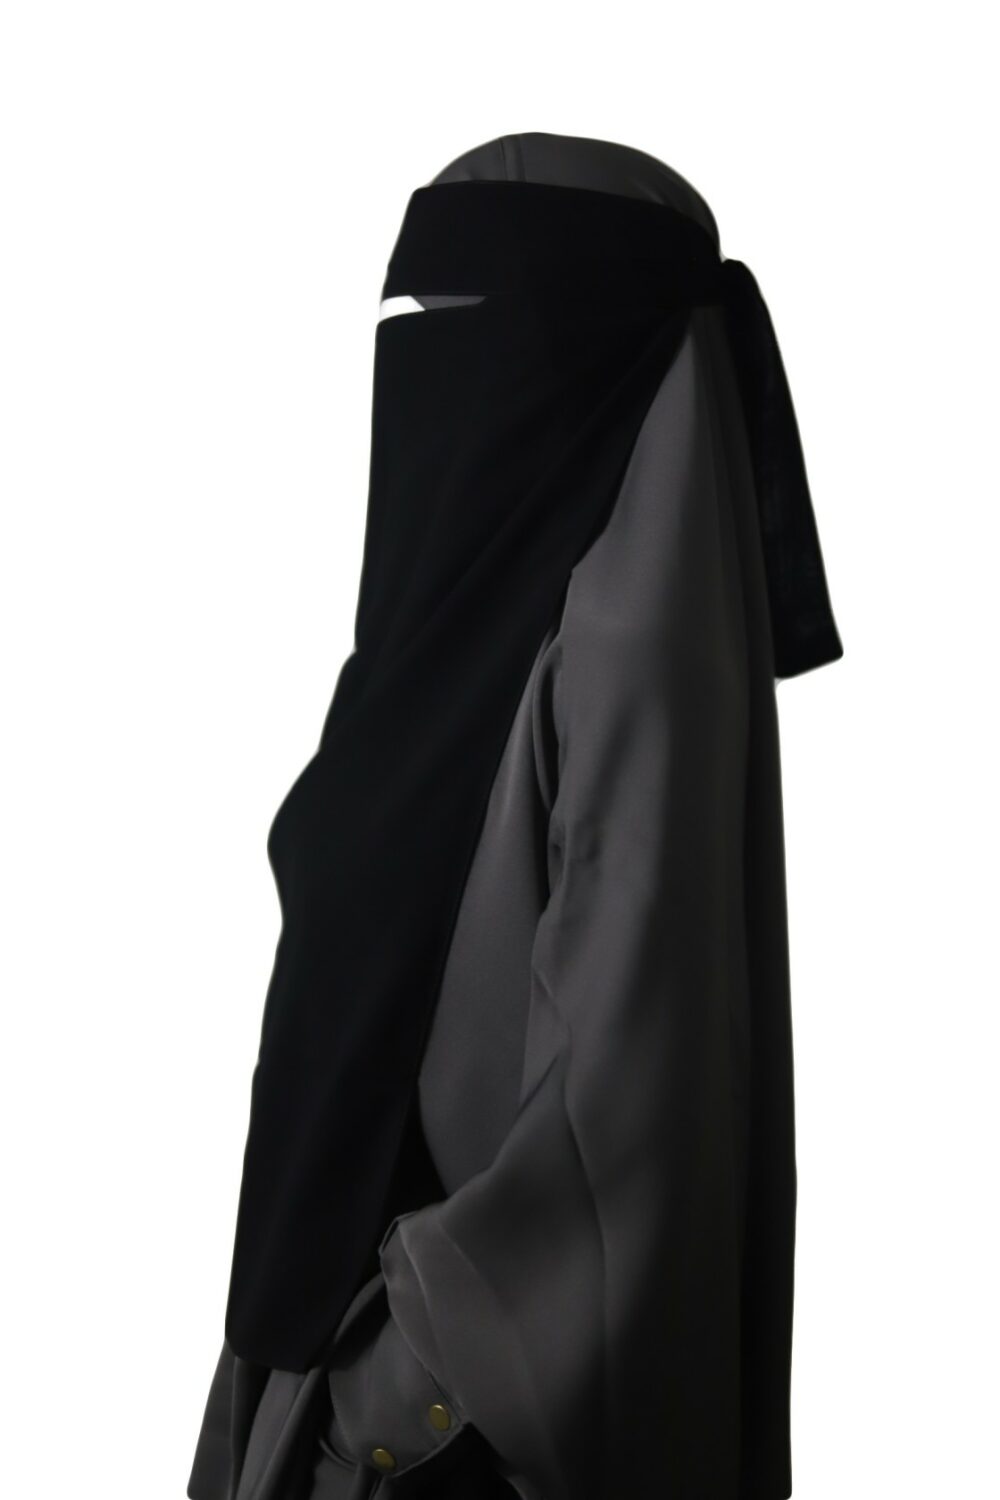 One layer niqab